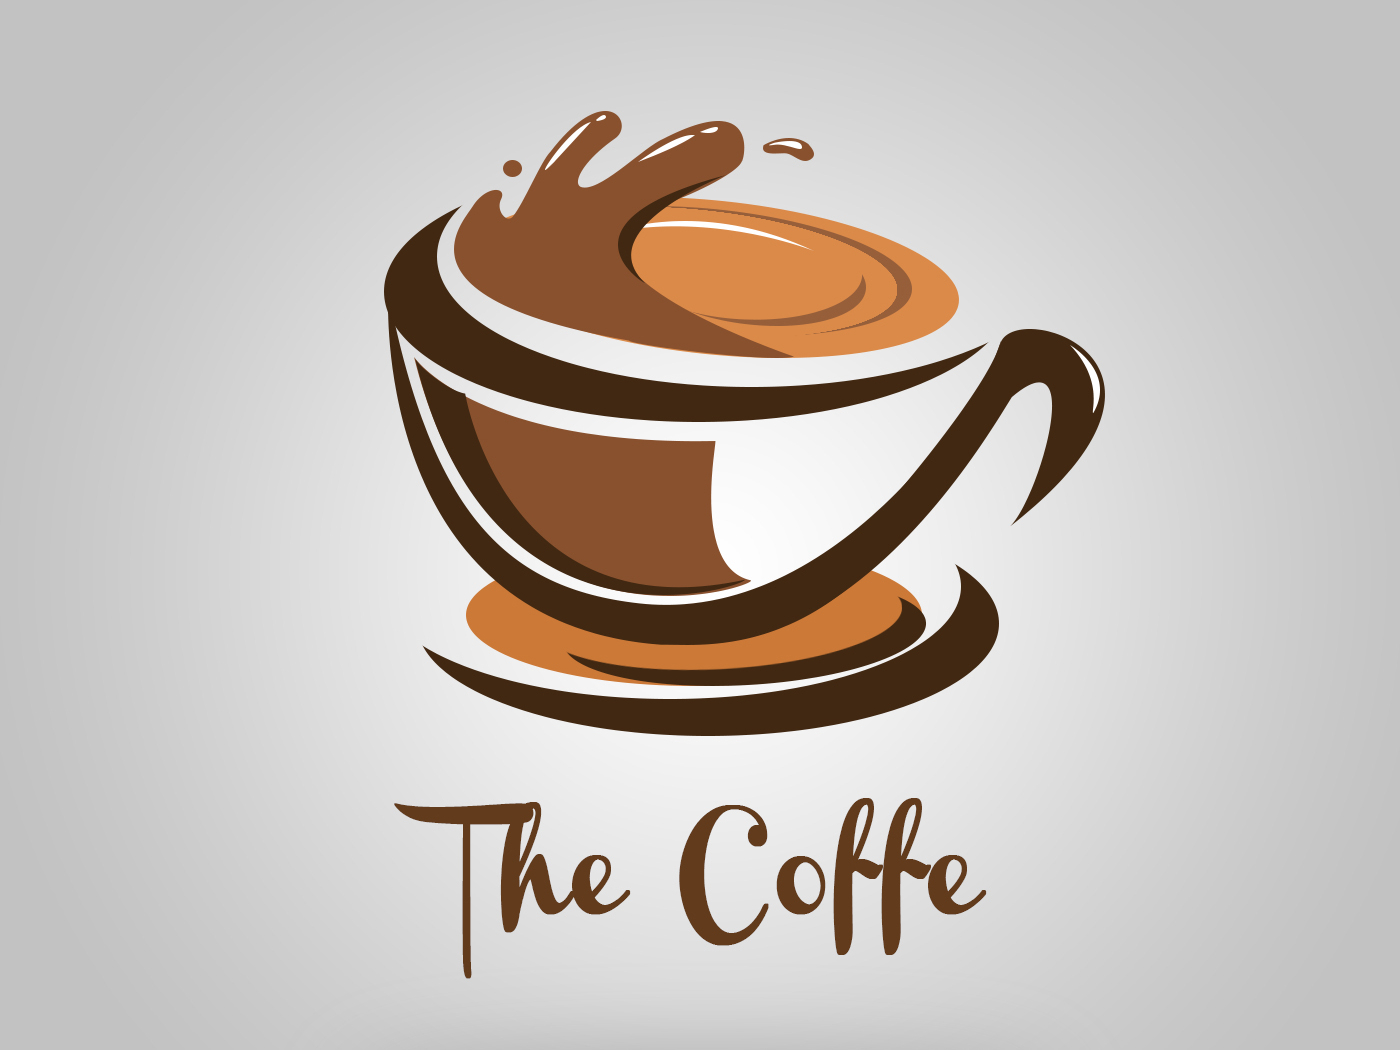 Download Coffee Logo by Mohammad Taufan Pramono on Dribbble